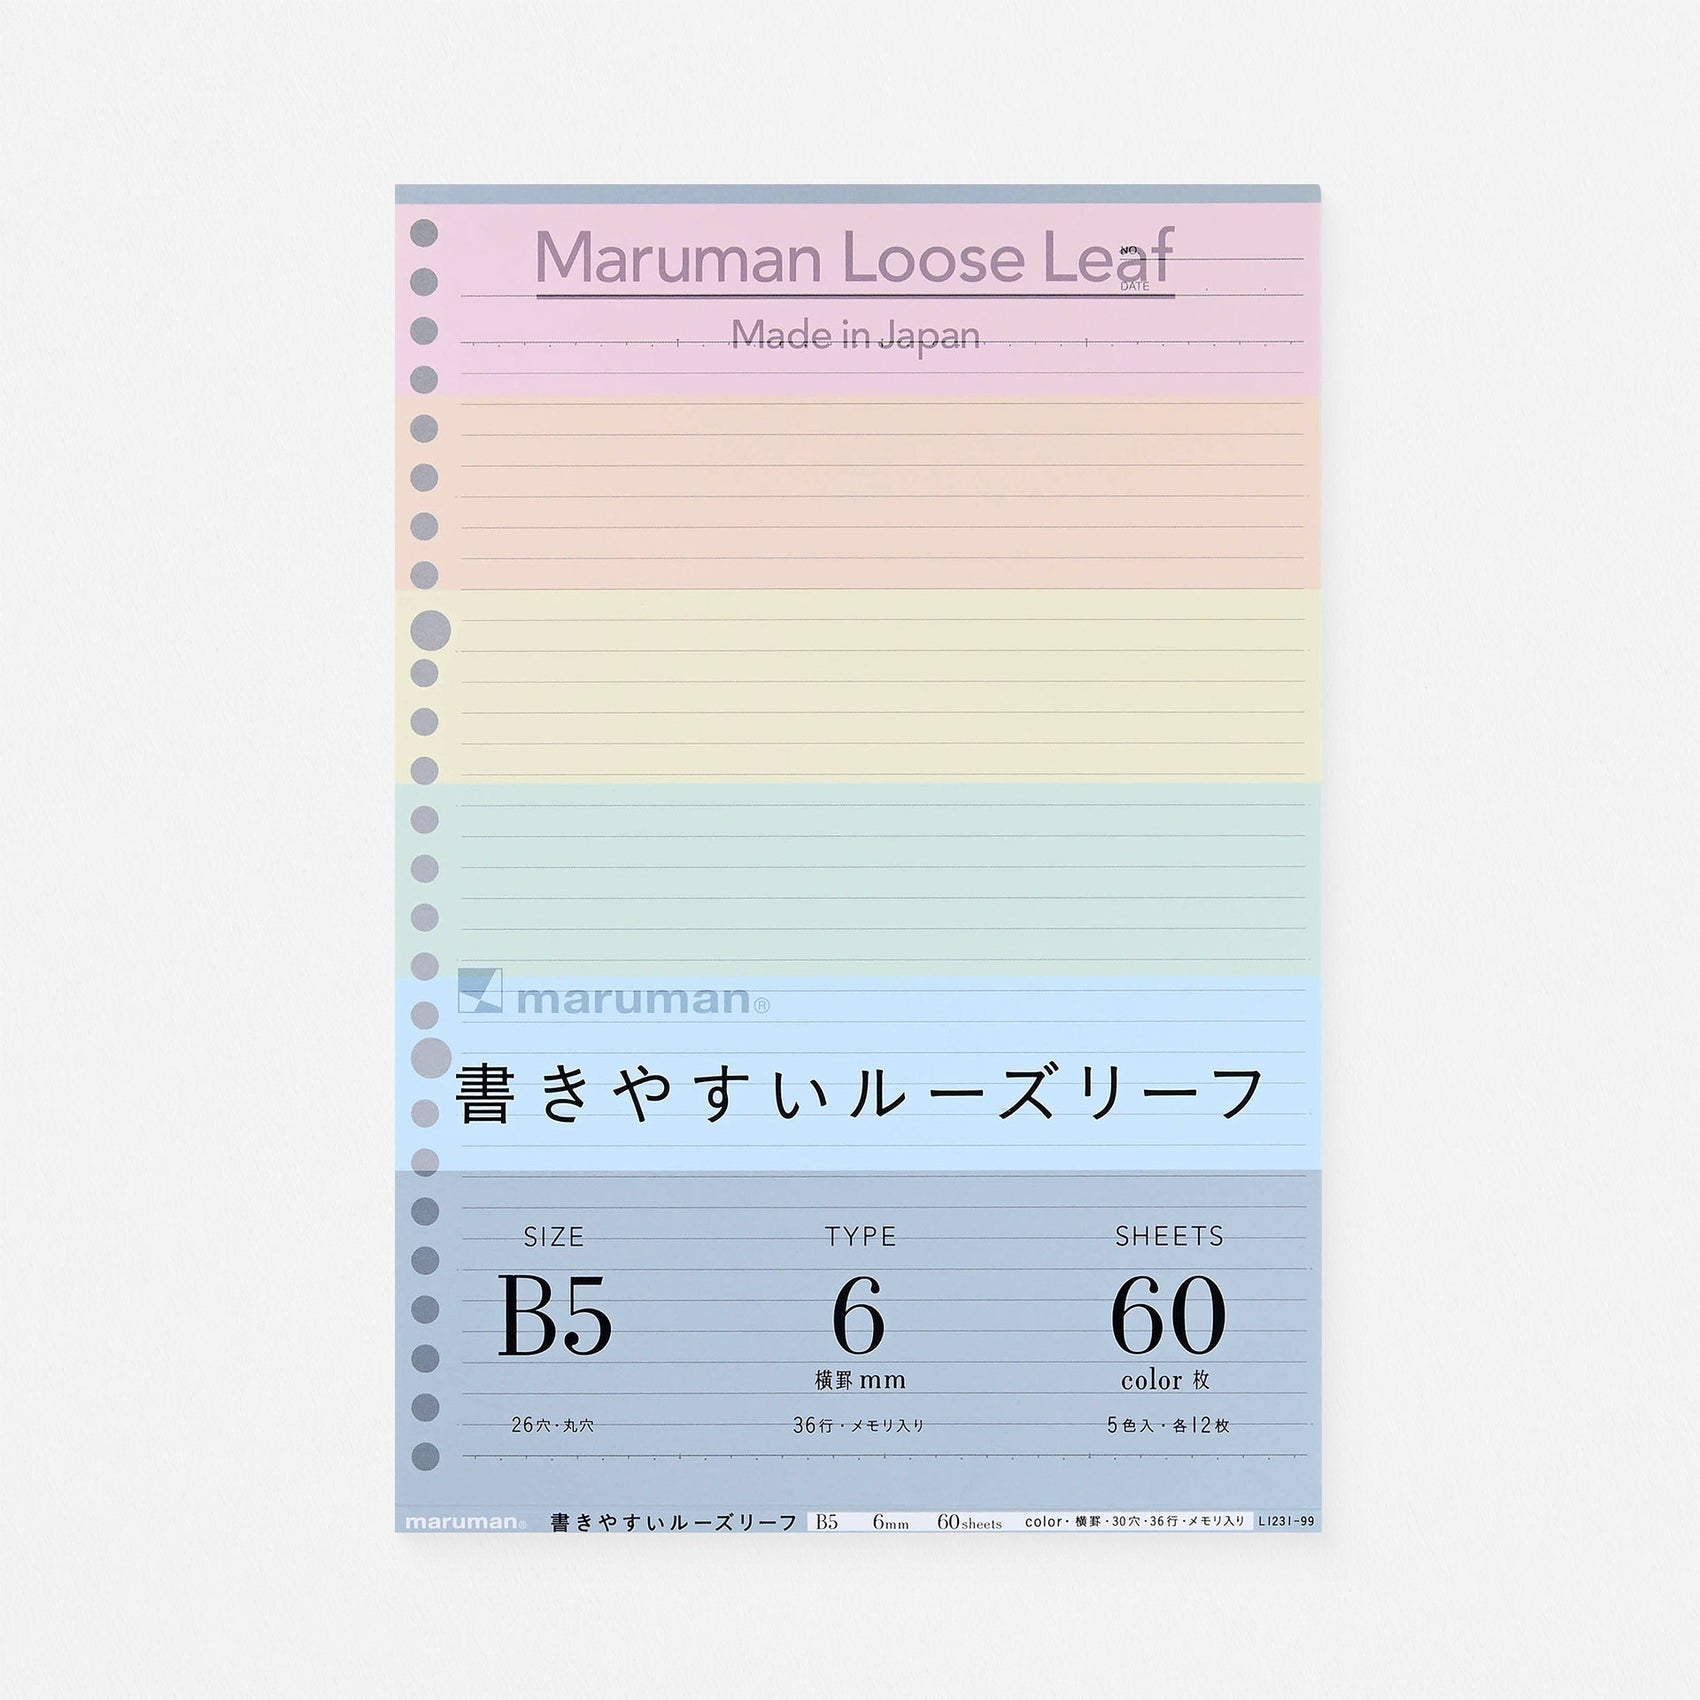 Maruman Loose Leaf Sheets B5 Multicolor 